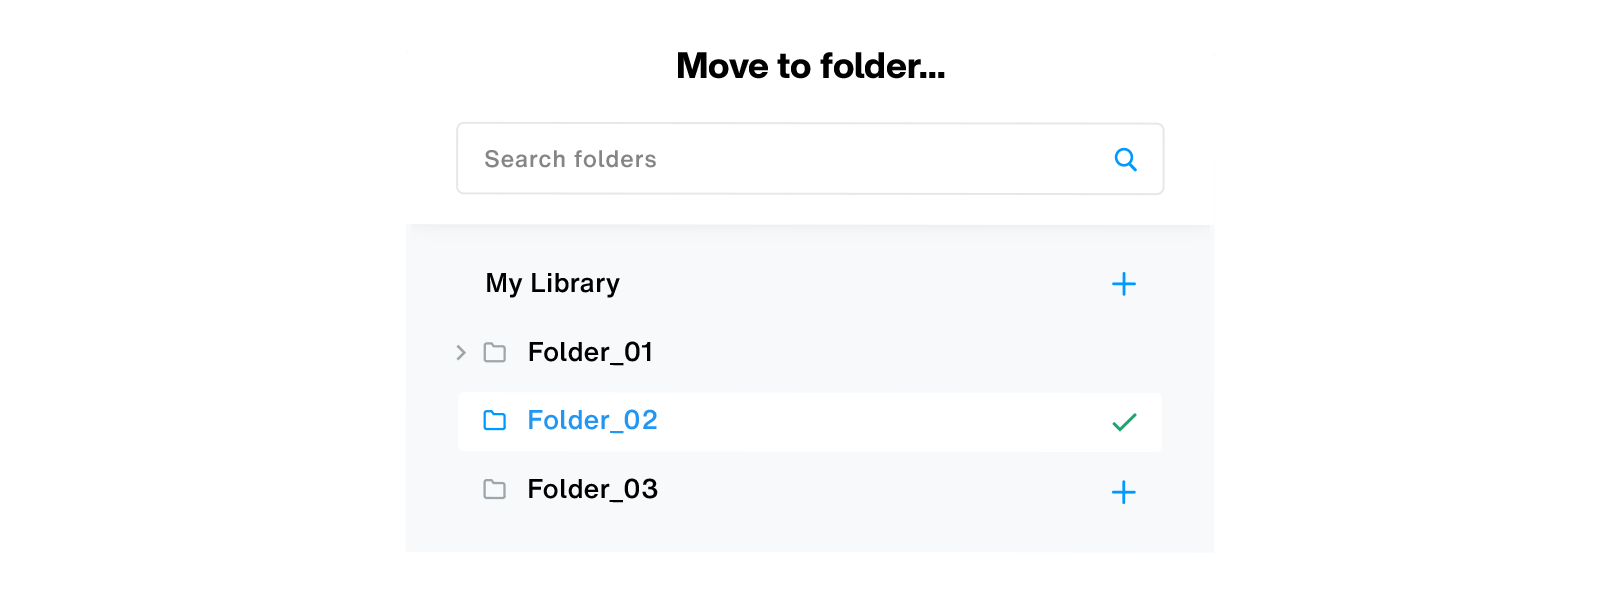 Moving to folder 01